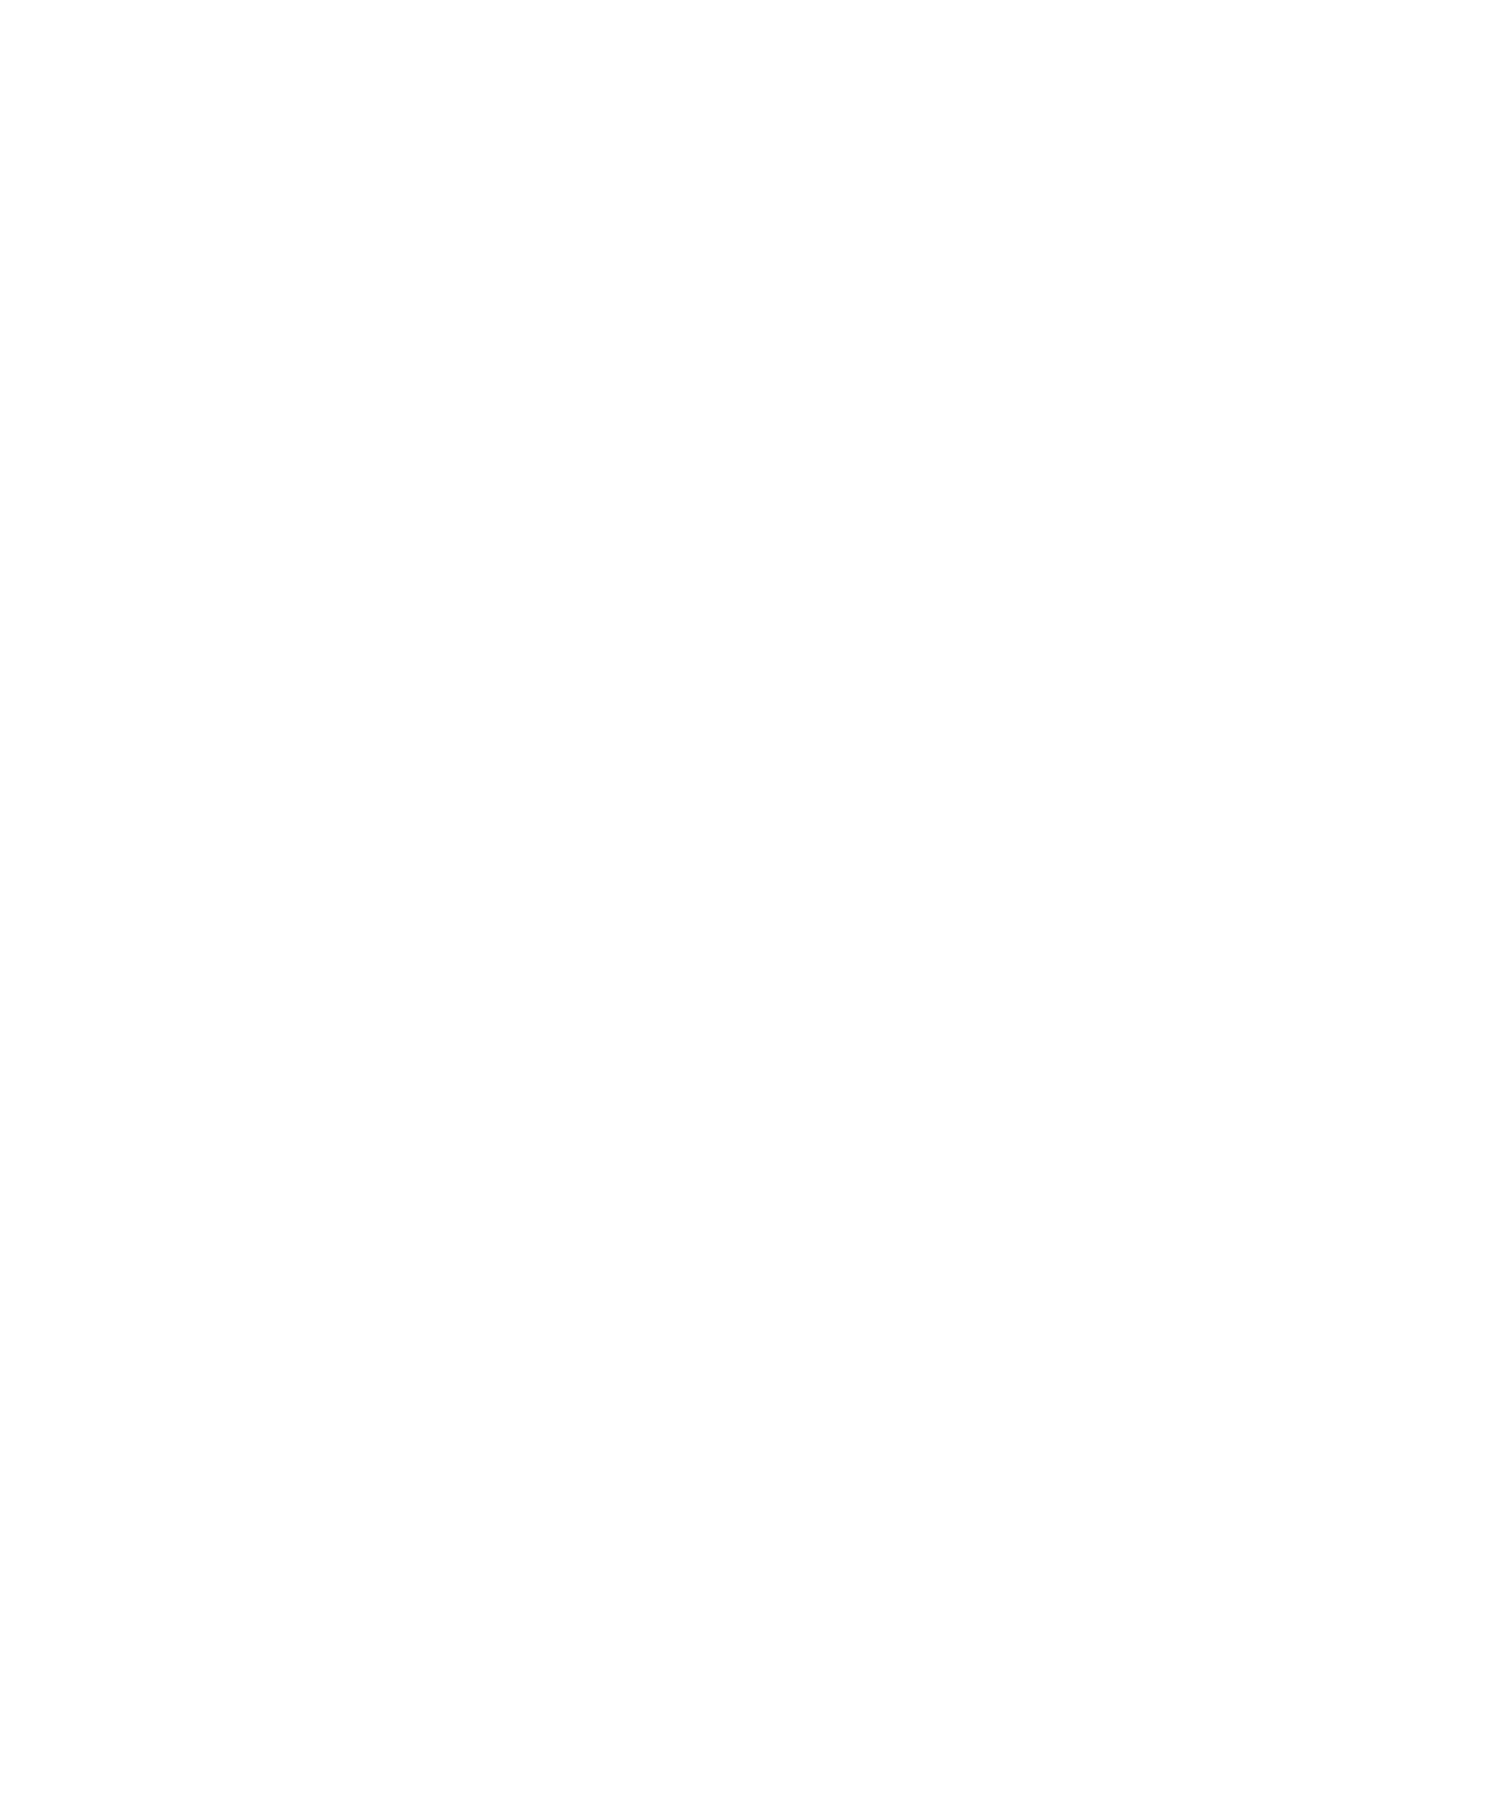 Round logo of a fist grasping a lightning bolt